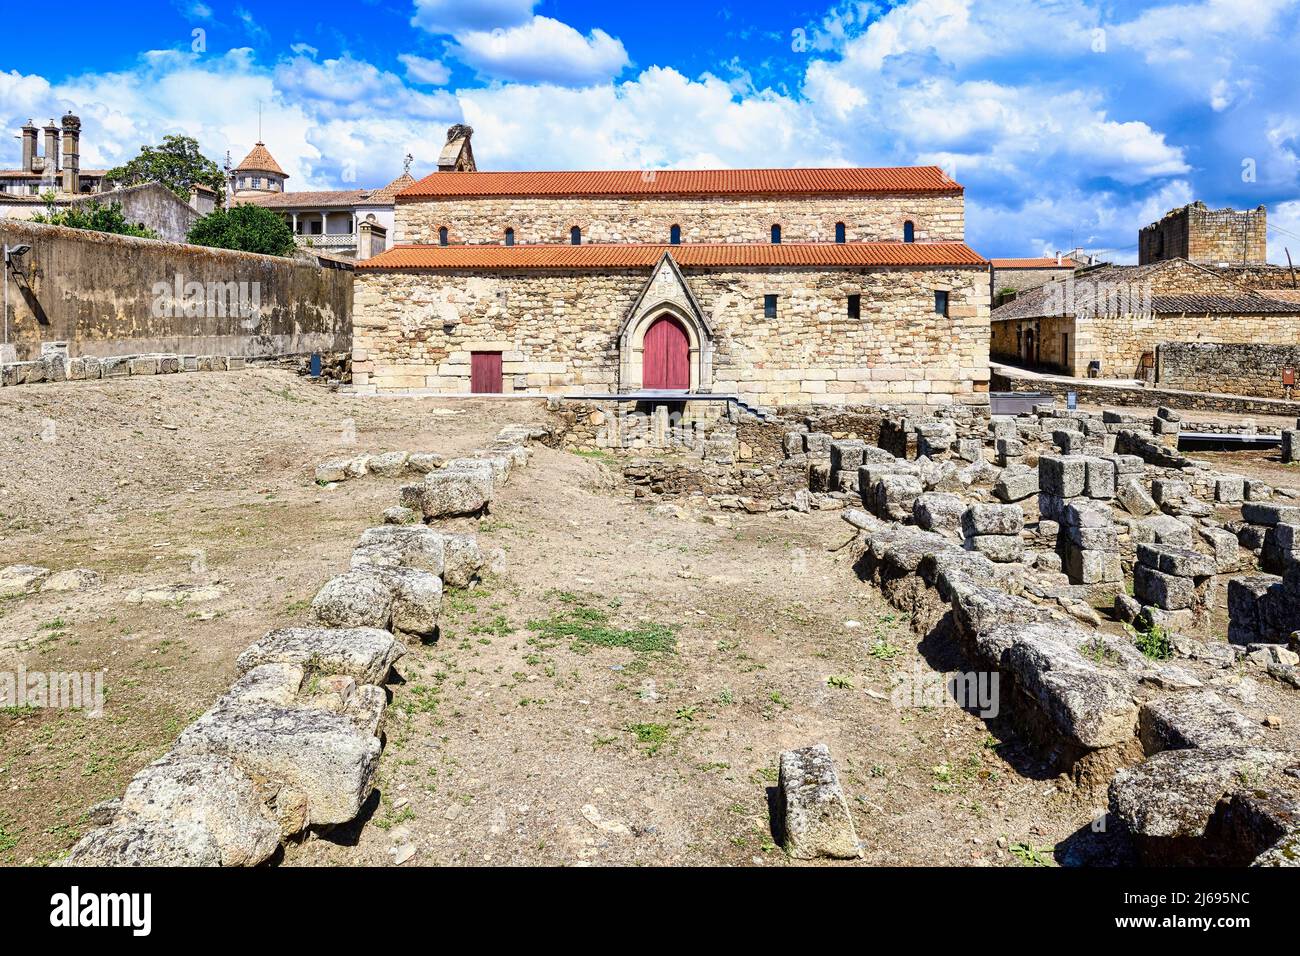 Decommissioned Catholic Cathedral and archaeological excavation site, Idanha-a-Velha, Serra da Estrela, Beira Alta, Portugal, Europe Stock Photo